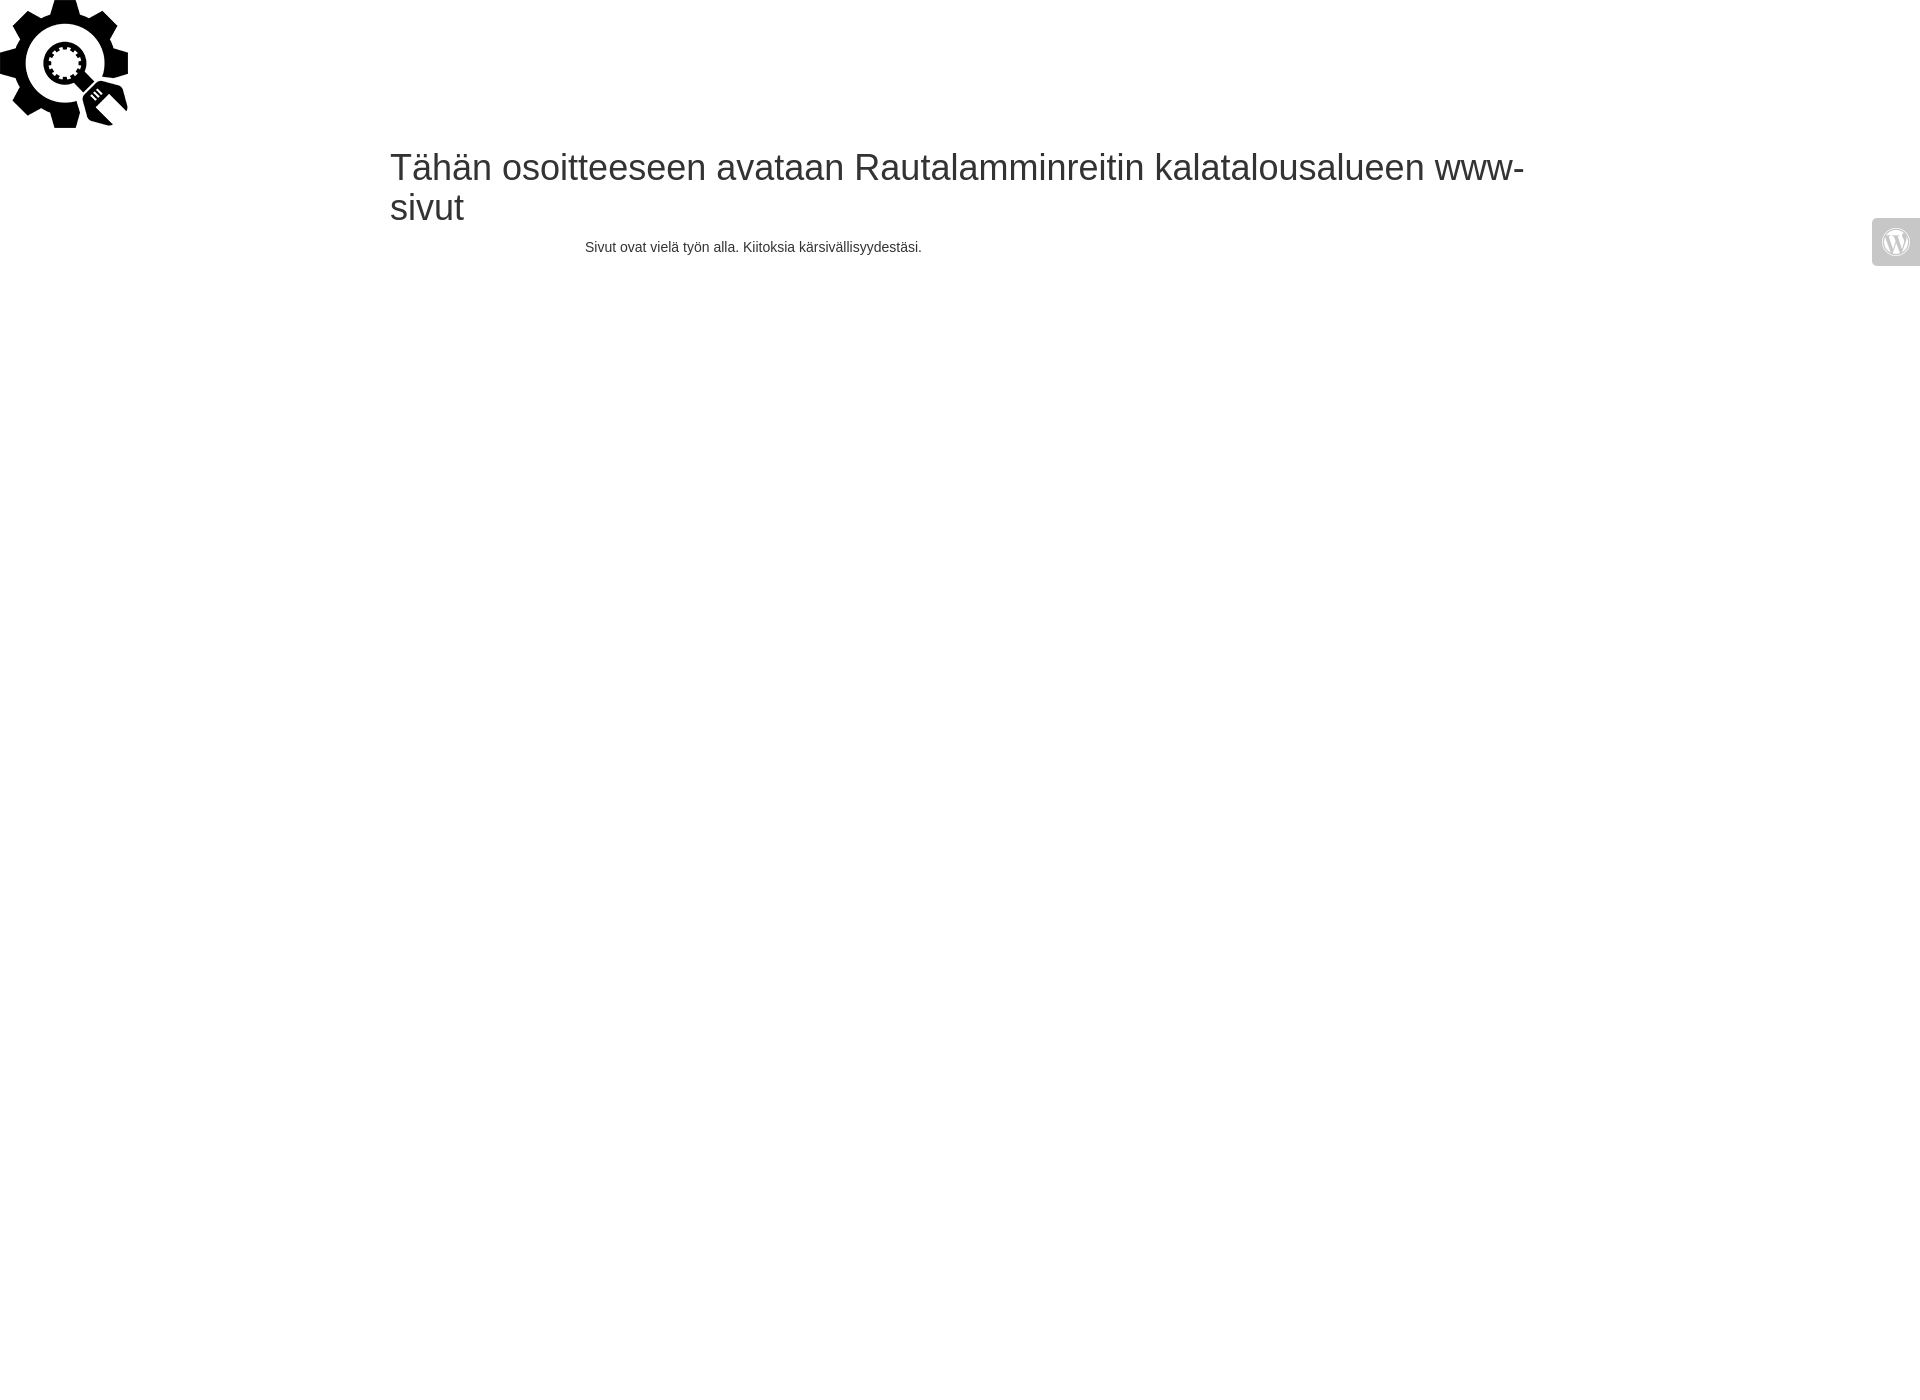 Skärmdump för rautalamminreitinkta.fi